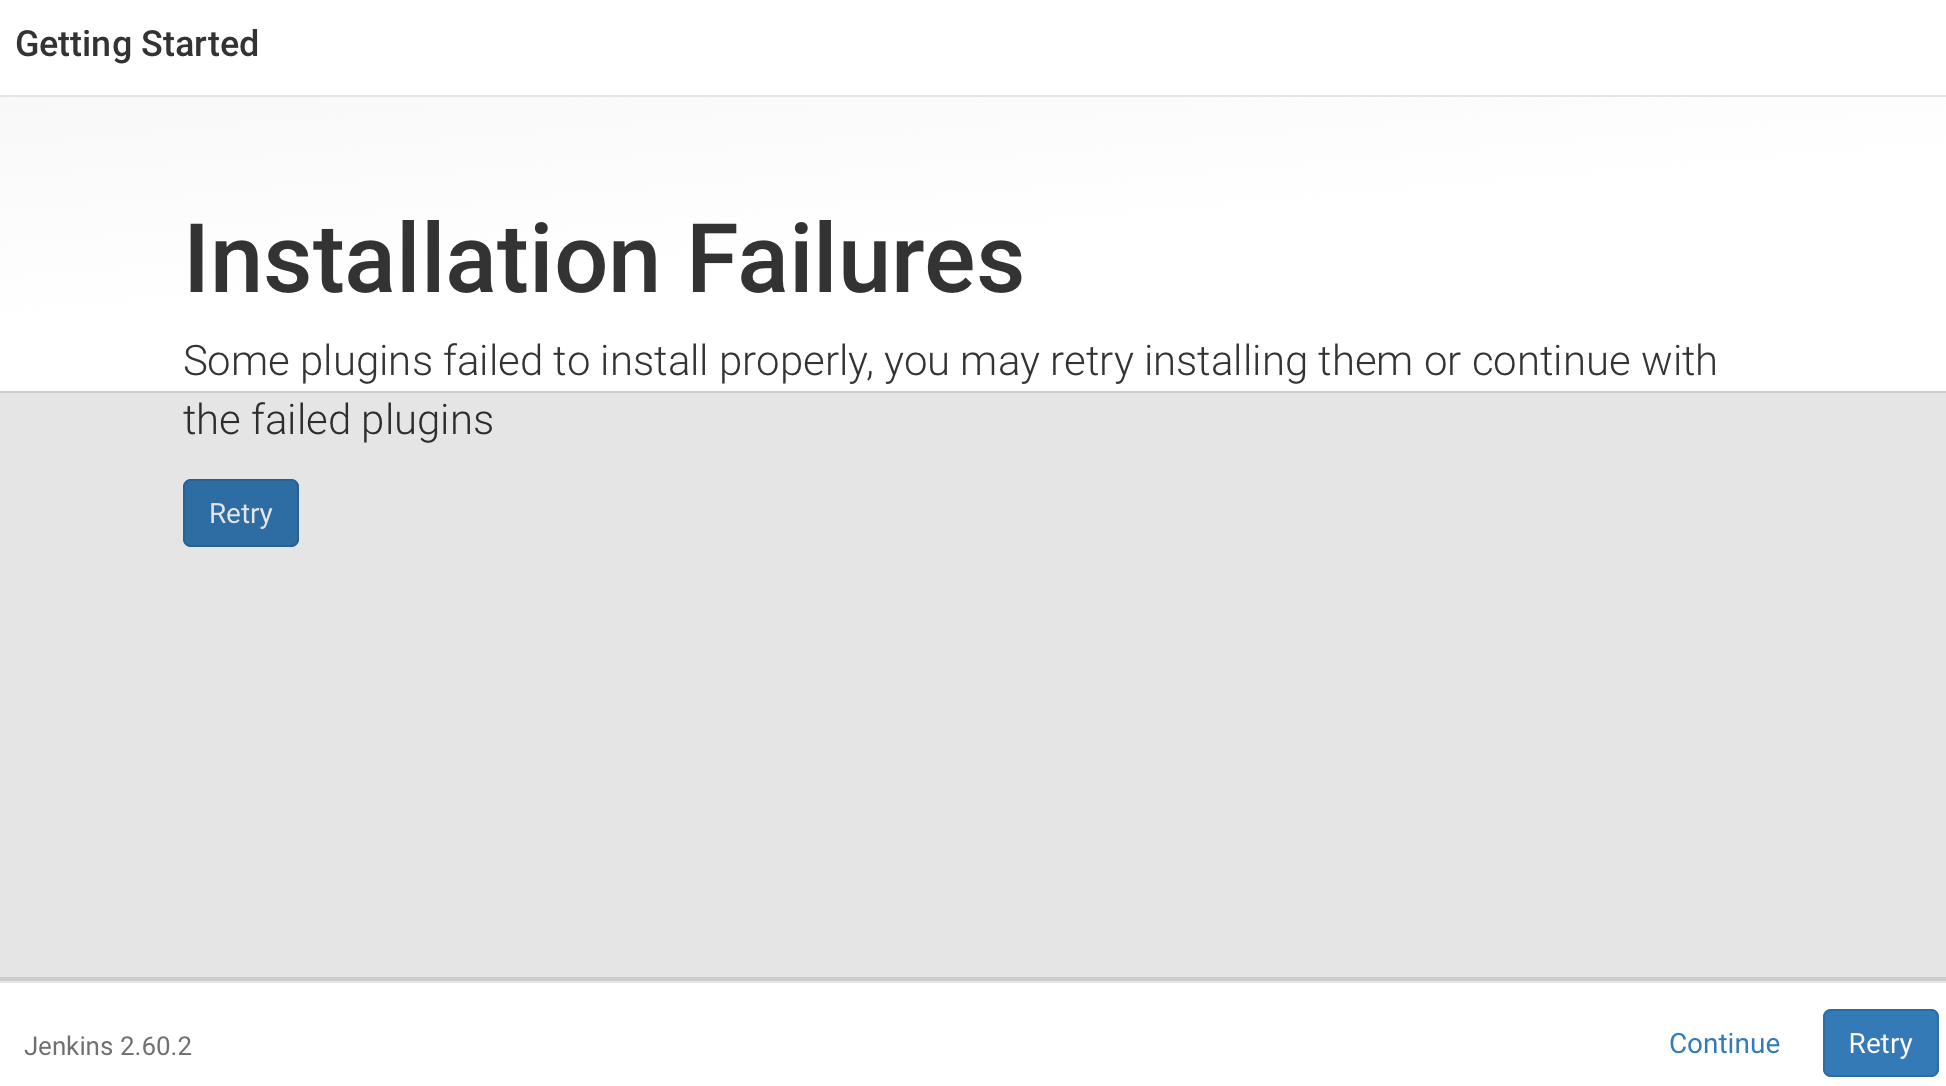 Installation failures